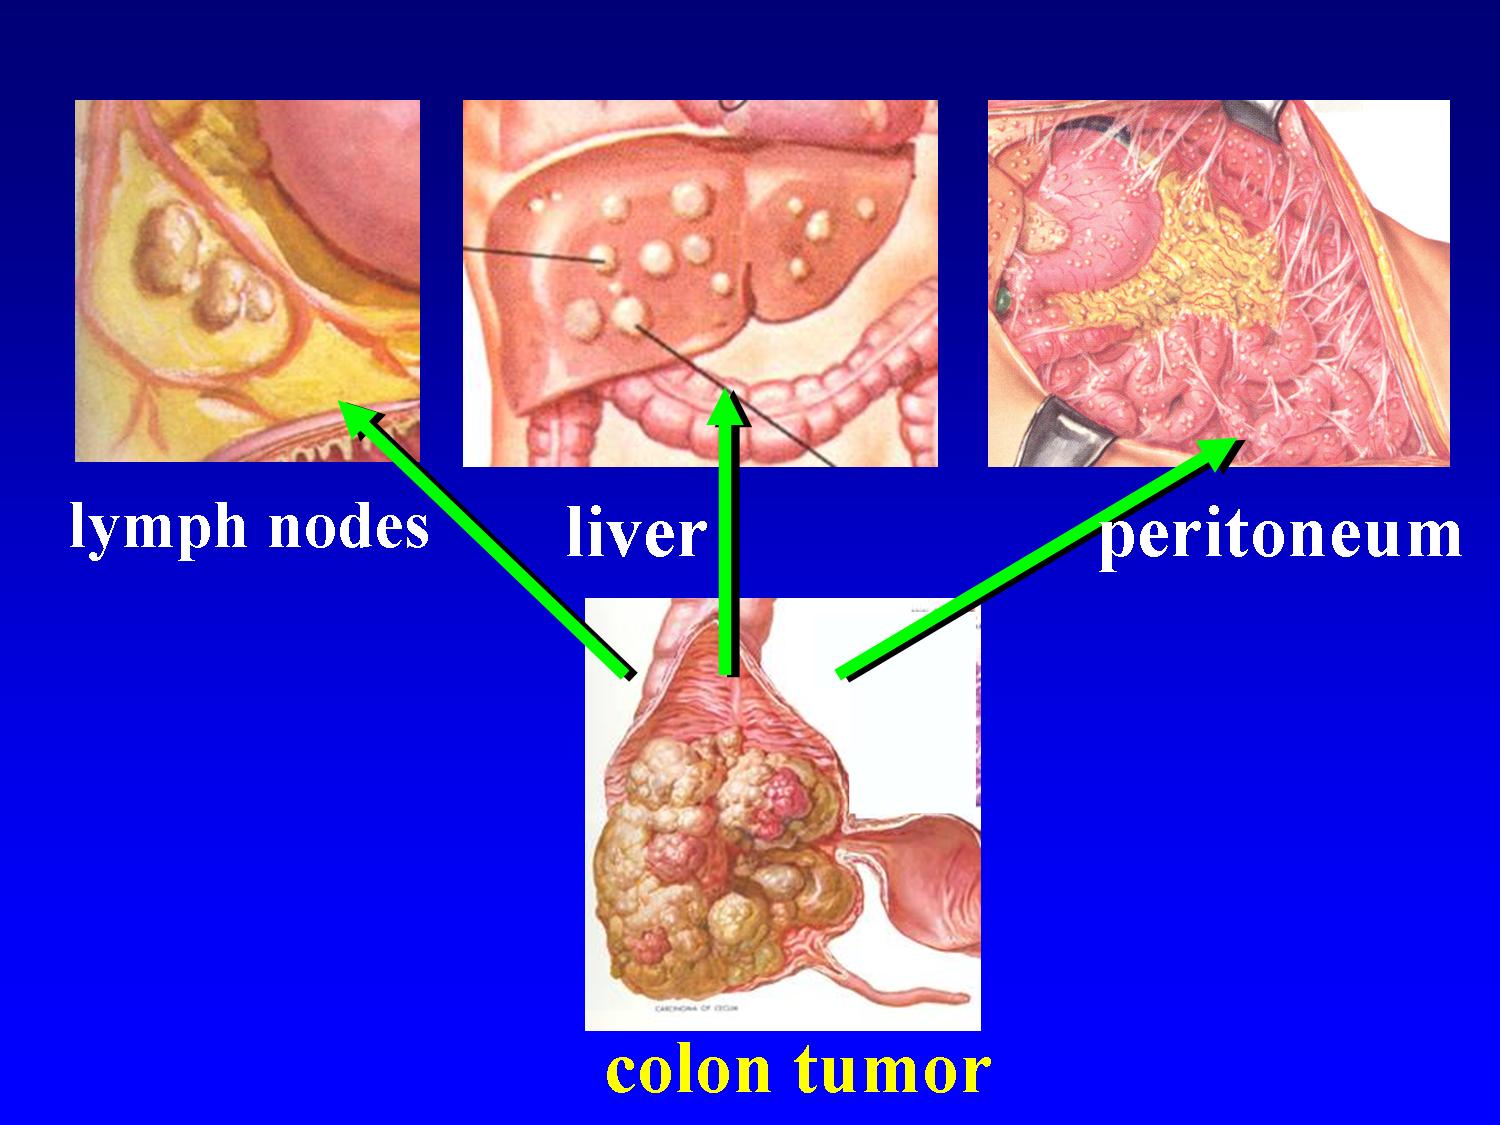 peritoneal cancer nhs